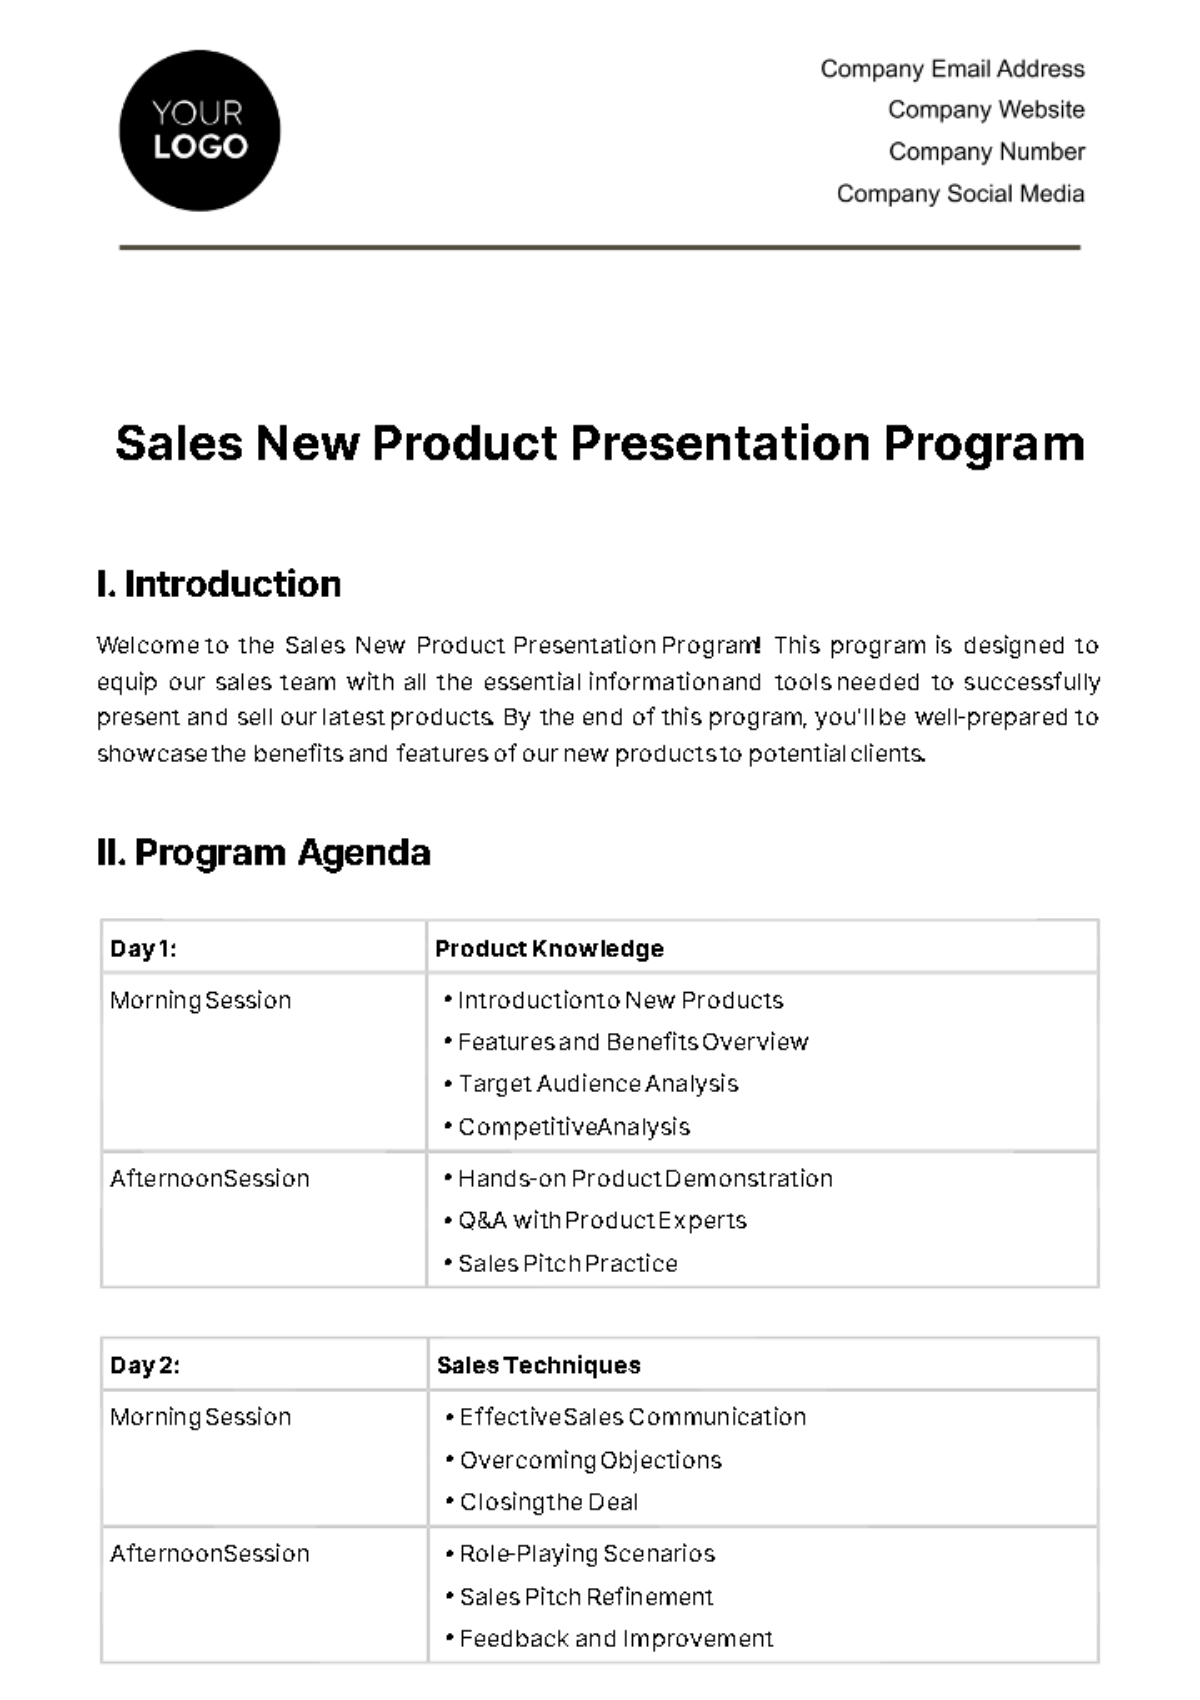 Sales New Product Presentation Program Template